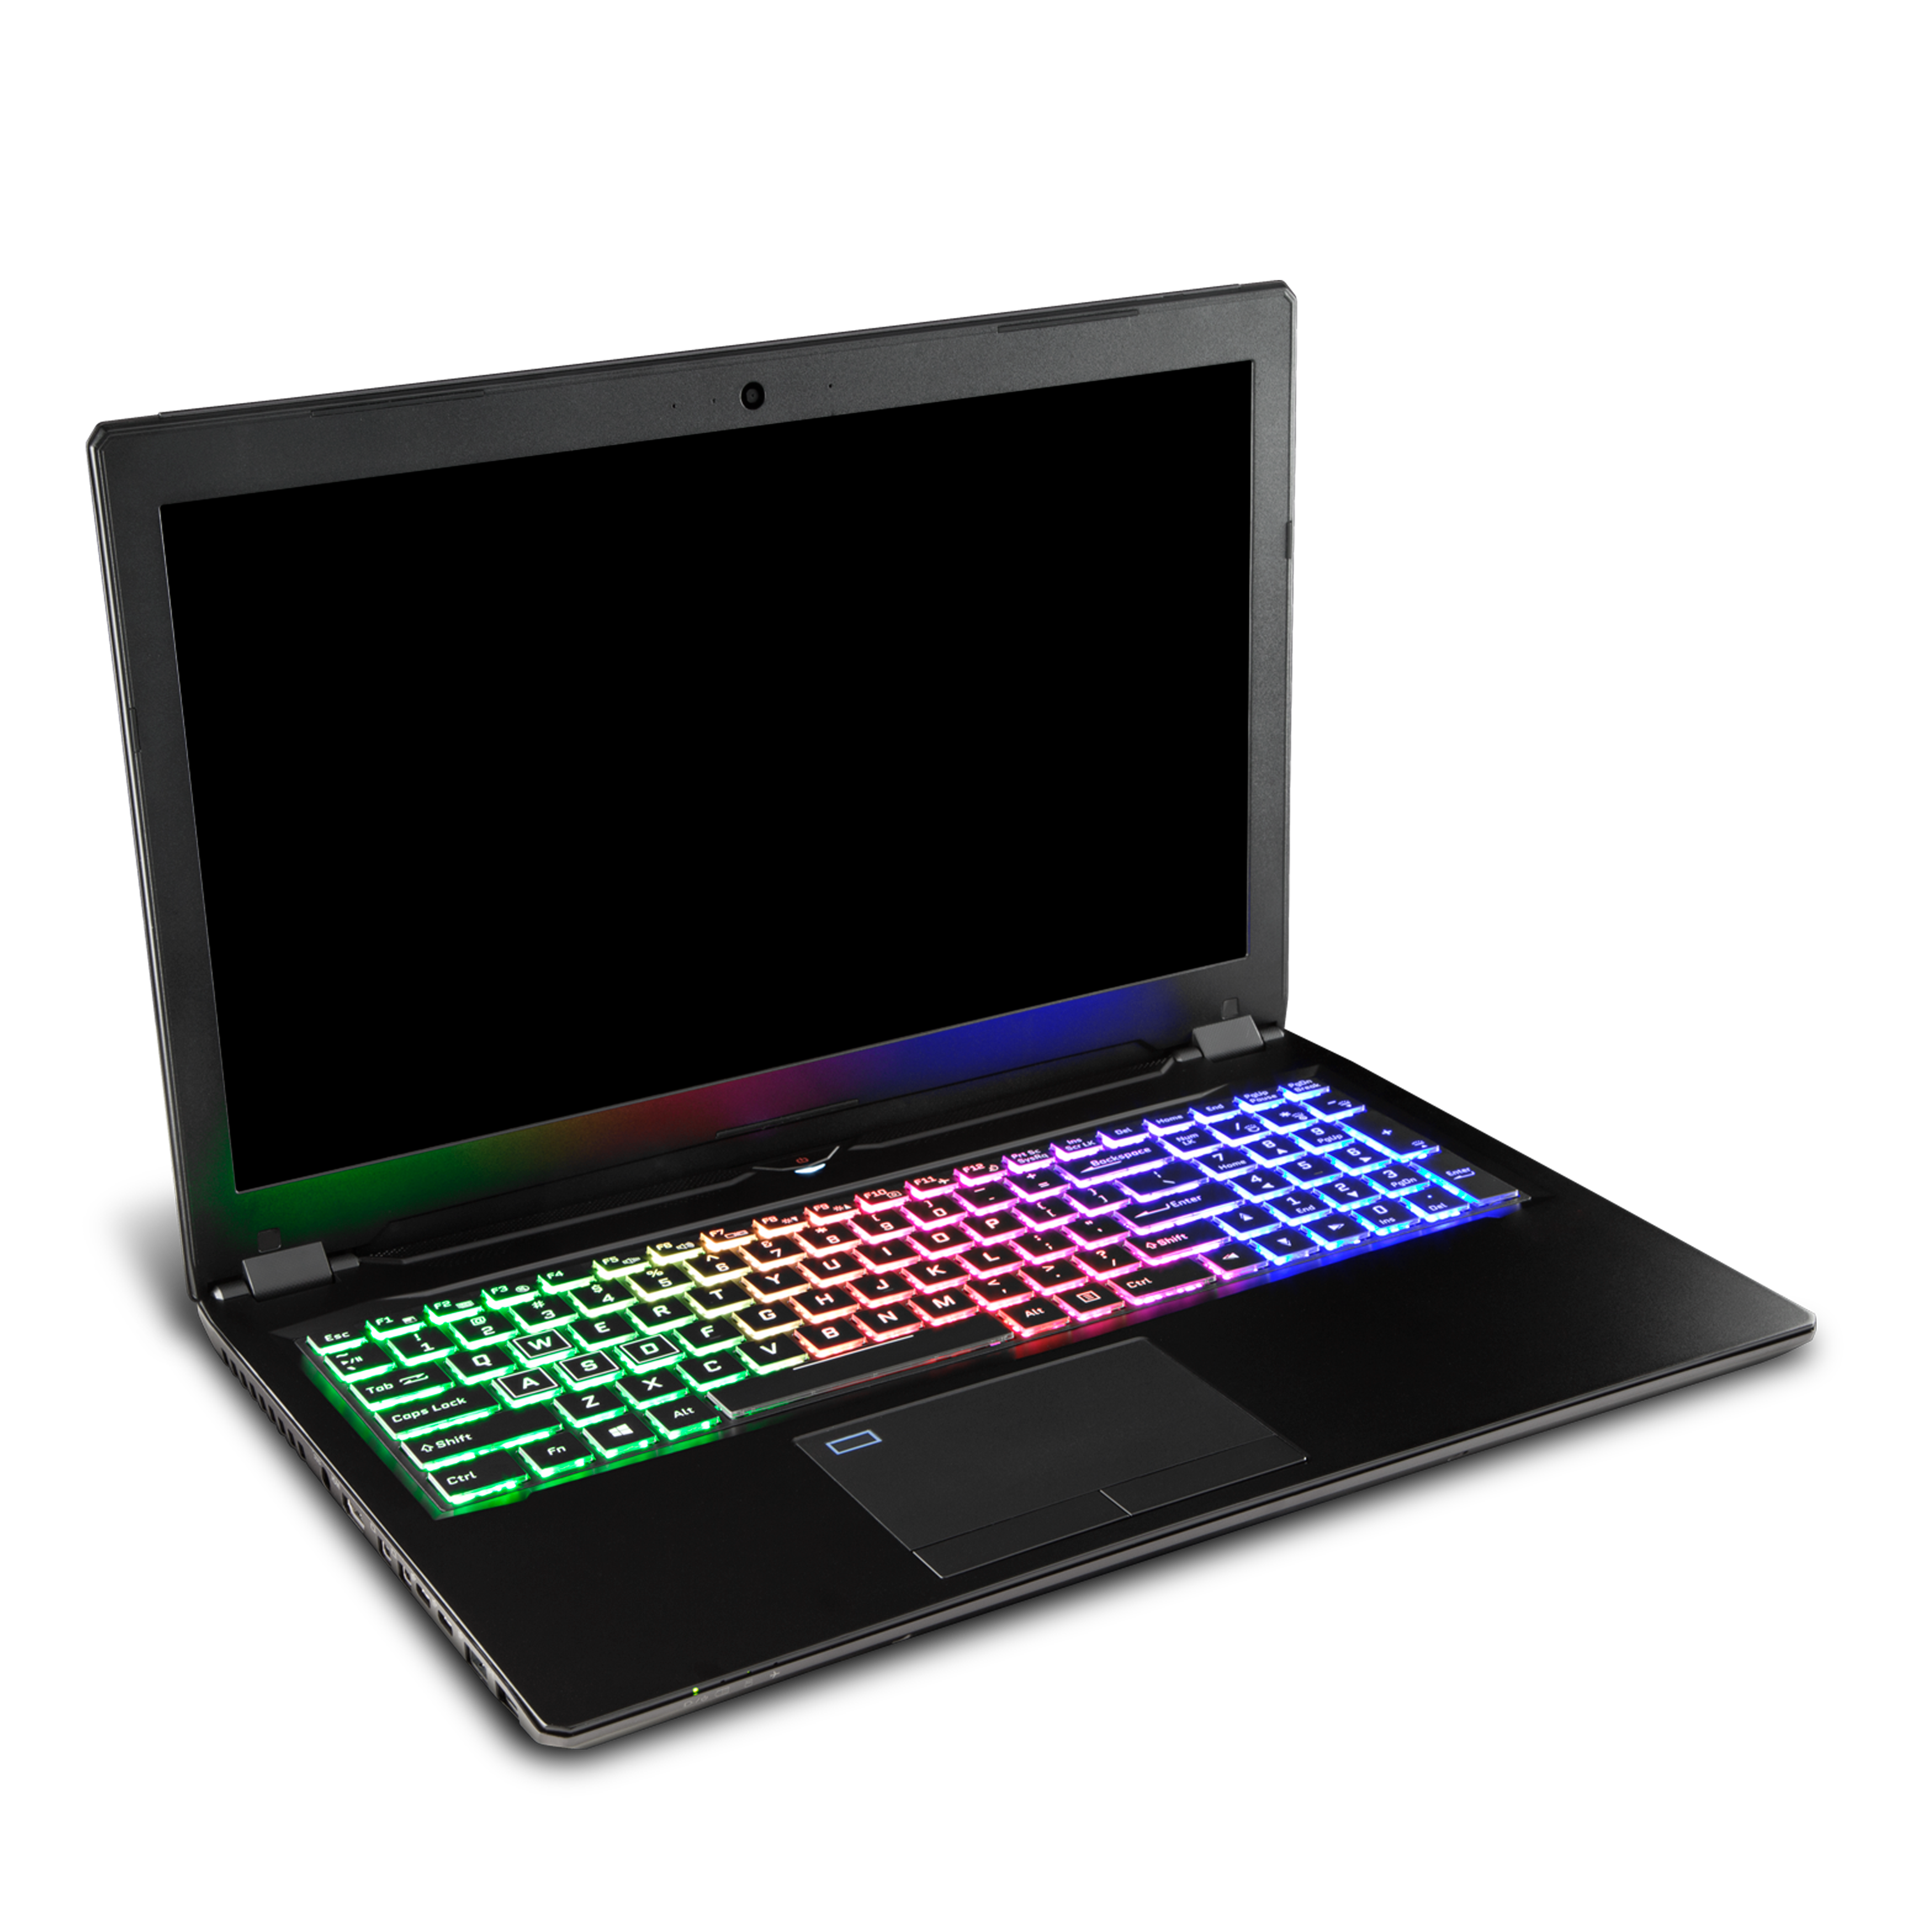 Frigøre tiger krigsskib NVIDIA Max-Q Design-Philosophy Laptops Are Available Now | GeForce News |  NVIDIA